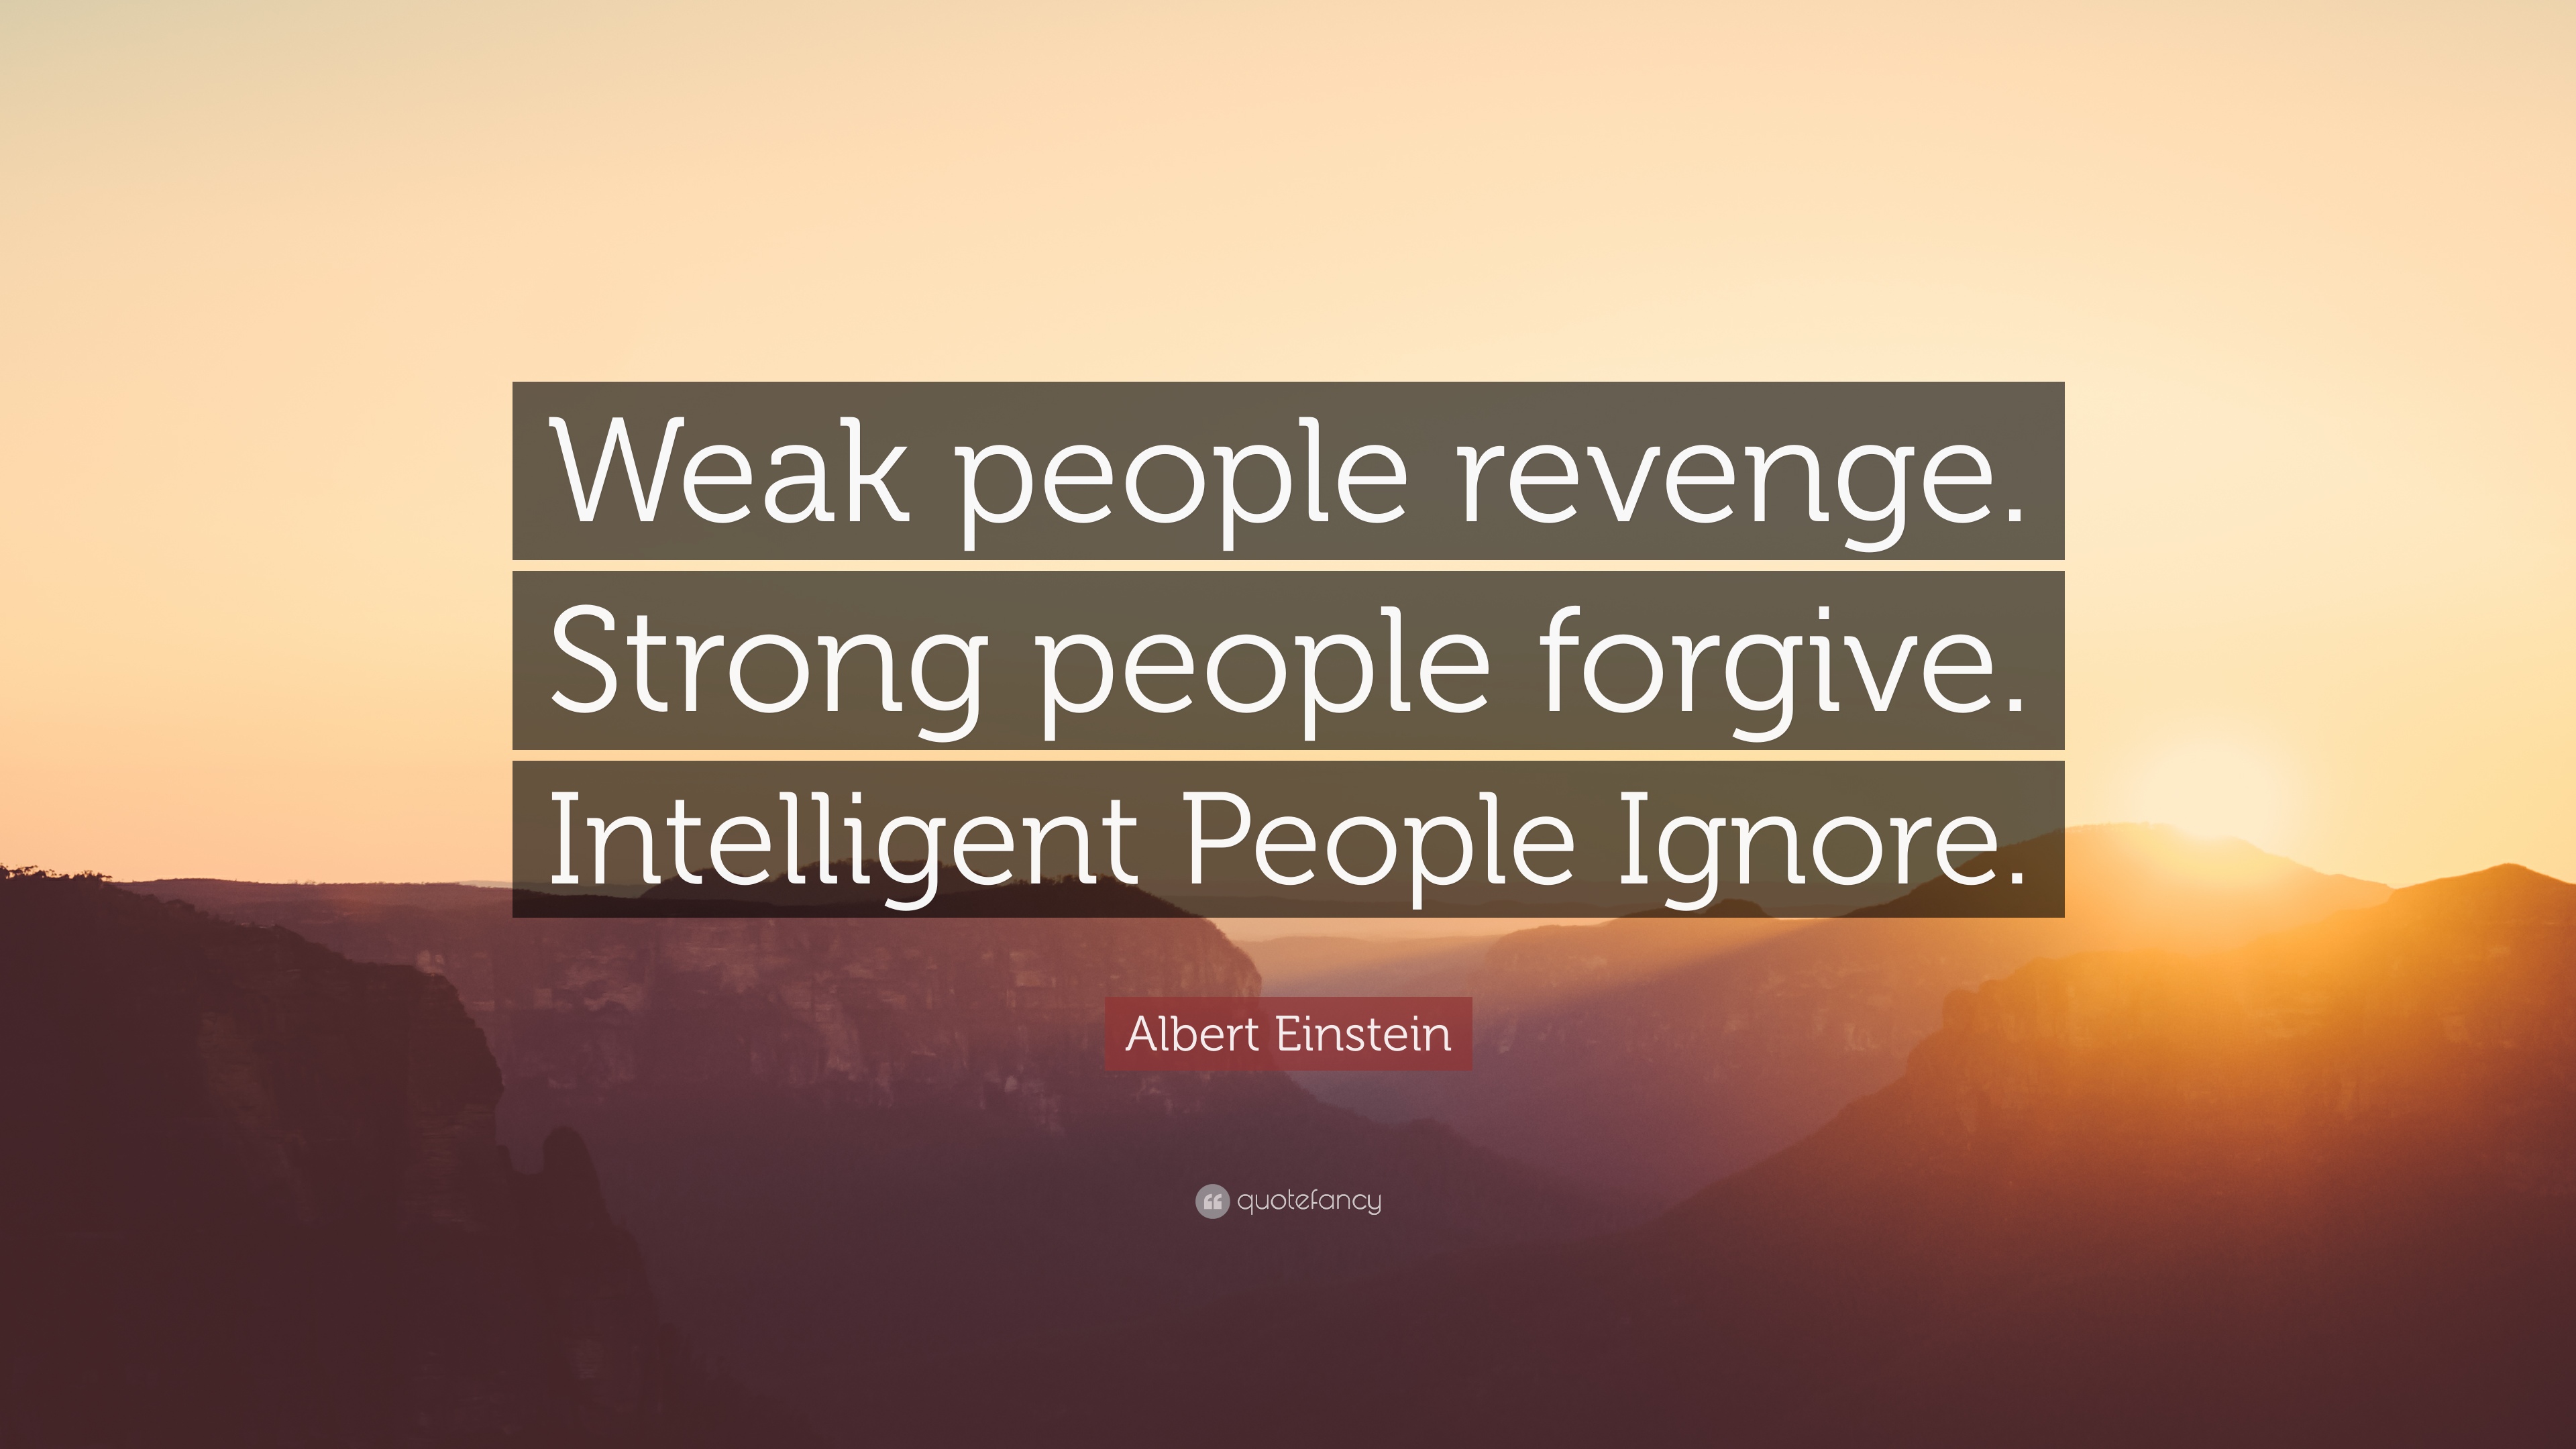 Albert Einstein Quote: “Weak people revenge. Strong people forgive. Intelligent People Ignore.”